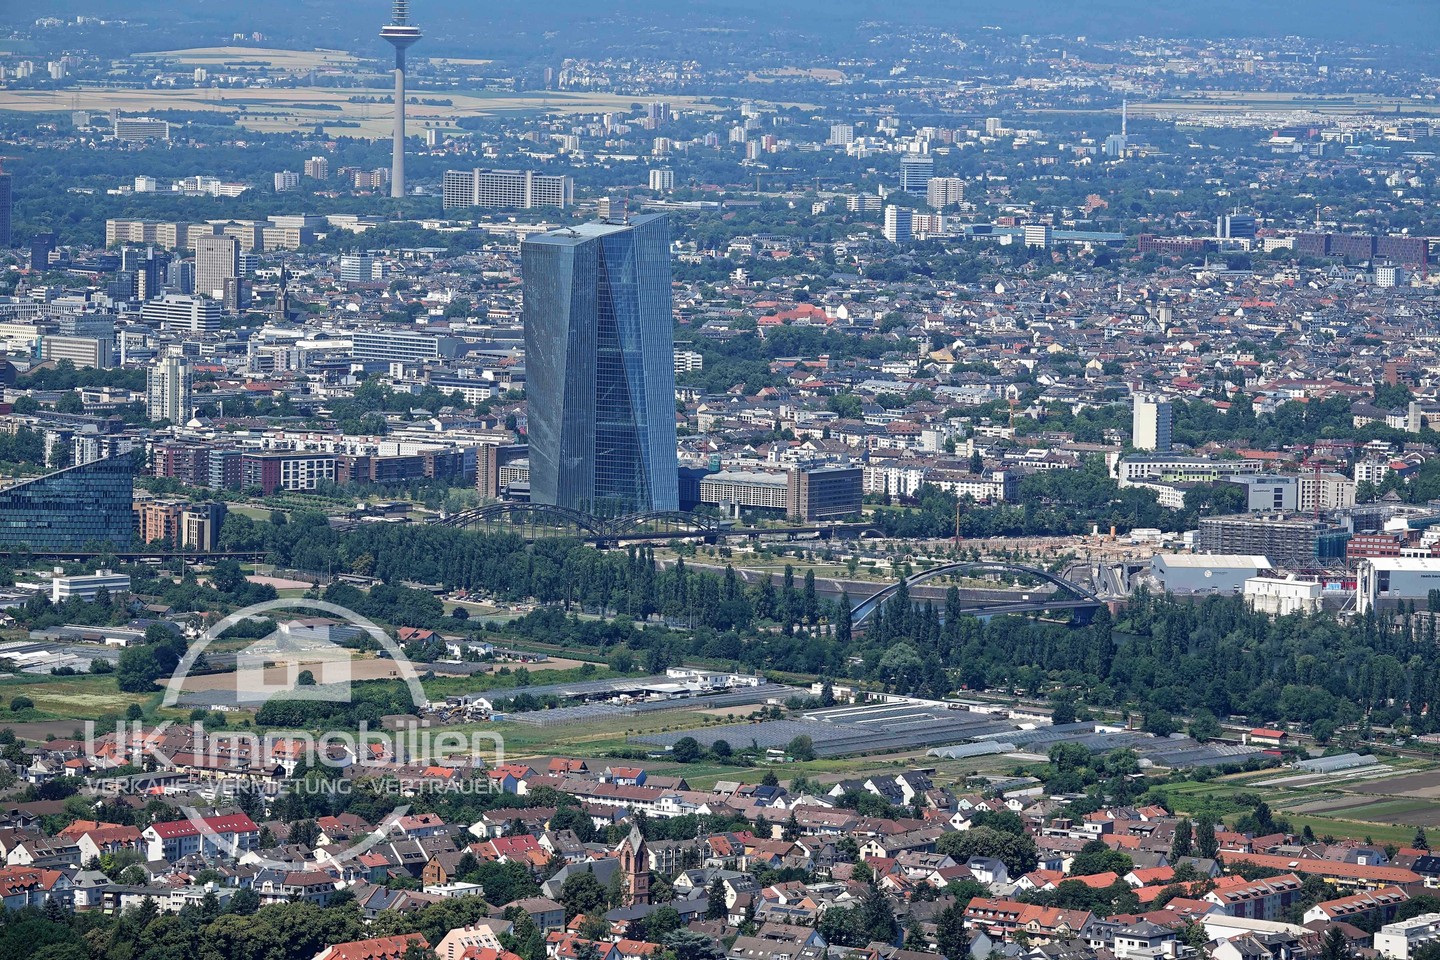 Immobilienmakler-Frankfurt-Oberrad-Oberrader-Felder-Europaeische-Zentralbank-Europaturm-Hafenpark-Mainufer.jpg